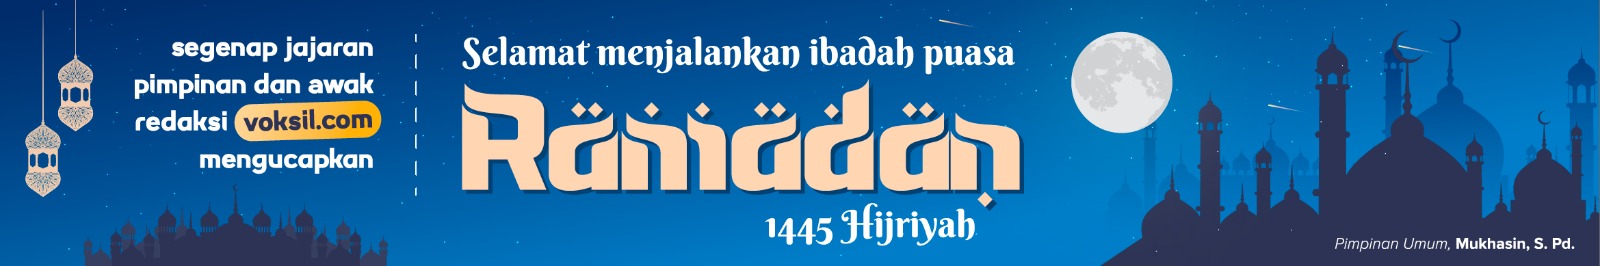 advertising banner